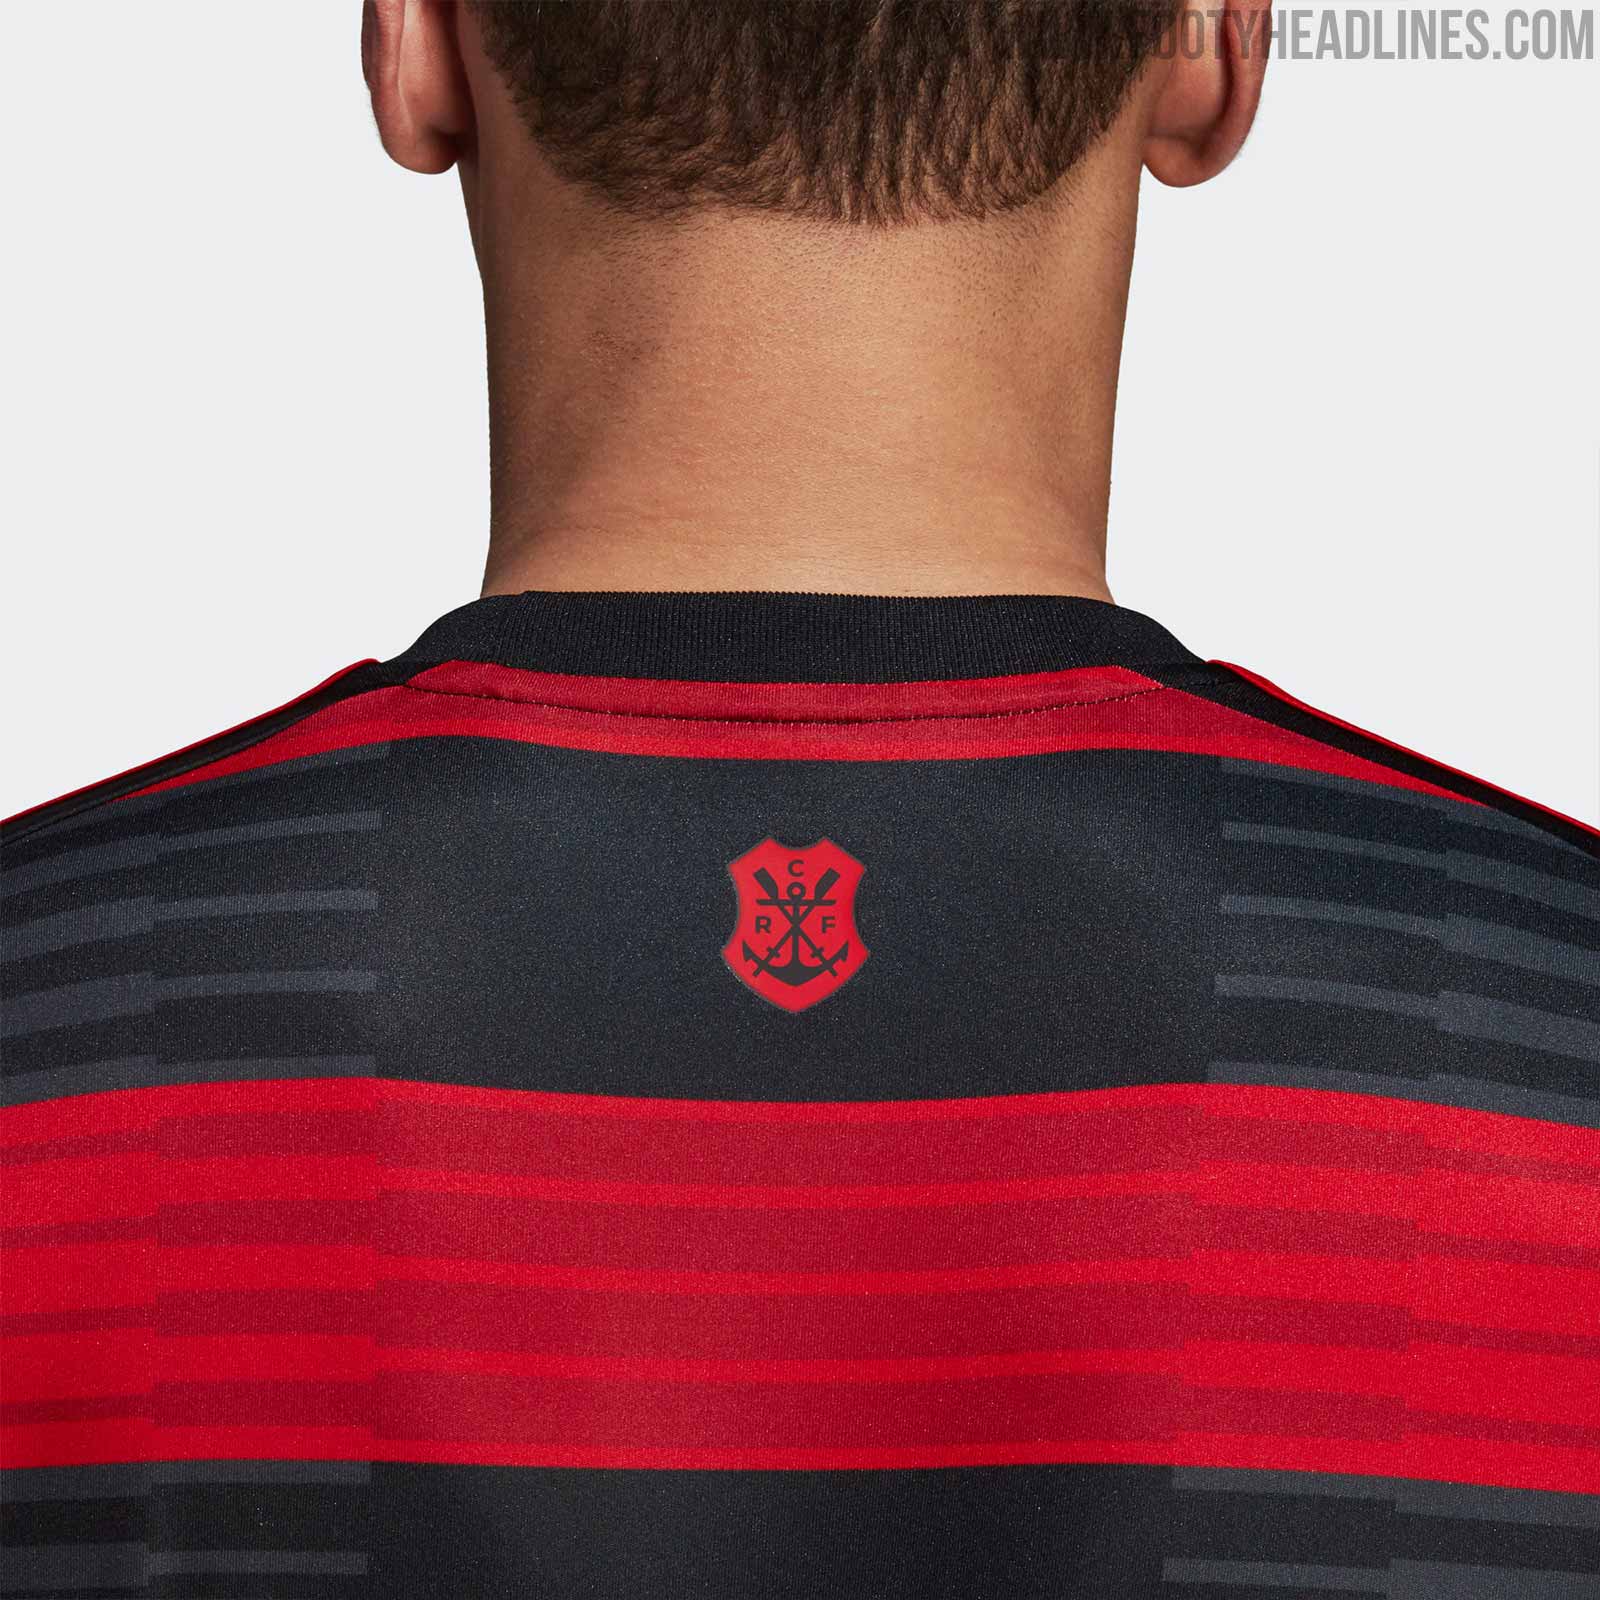 Adidas Flamengo 2018-19 Home & Away Kits Released - Footy Headlines